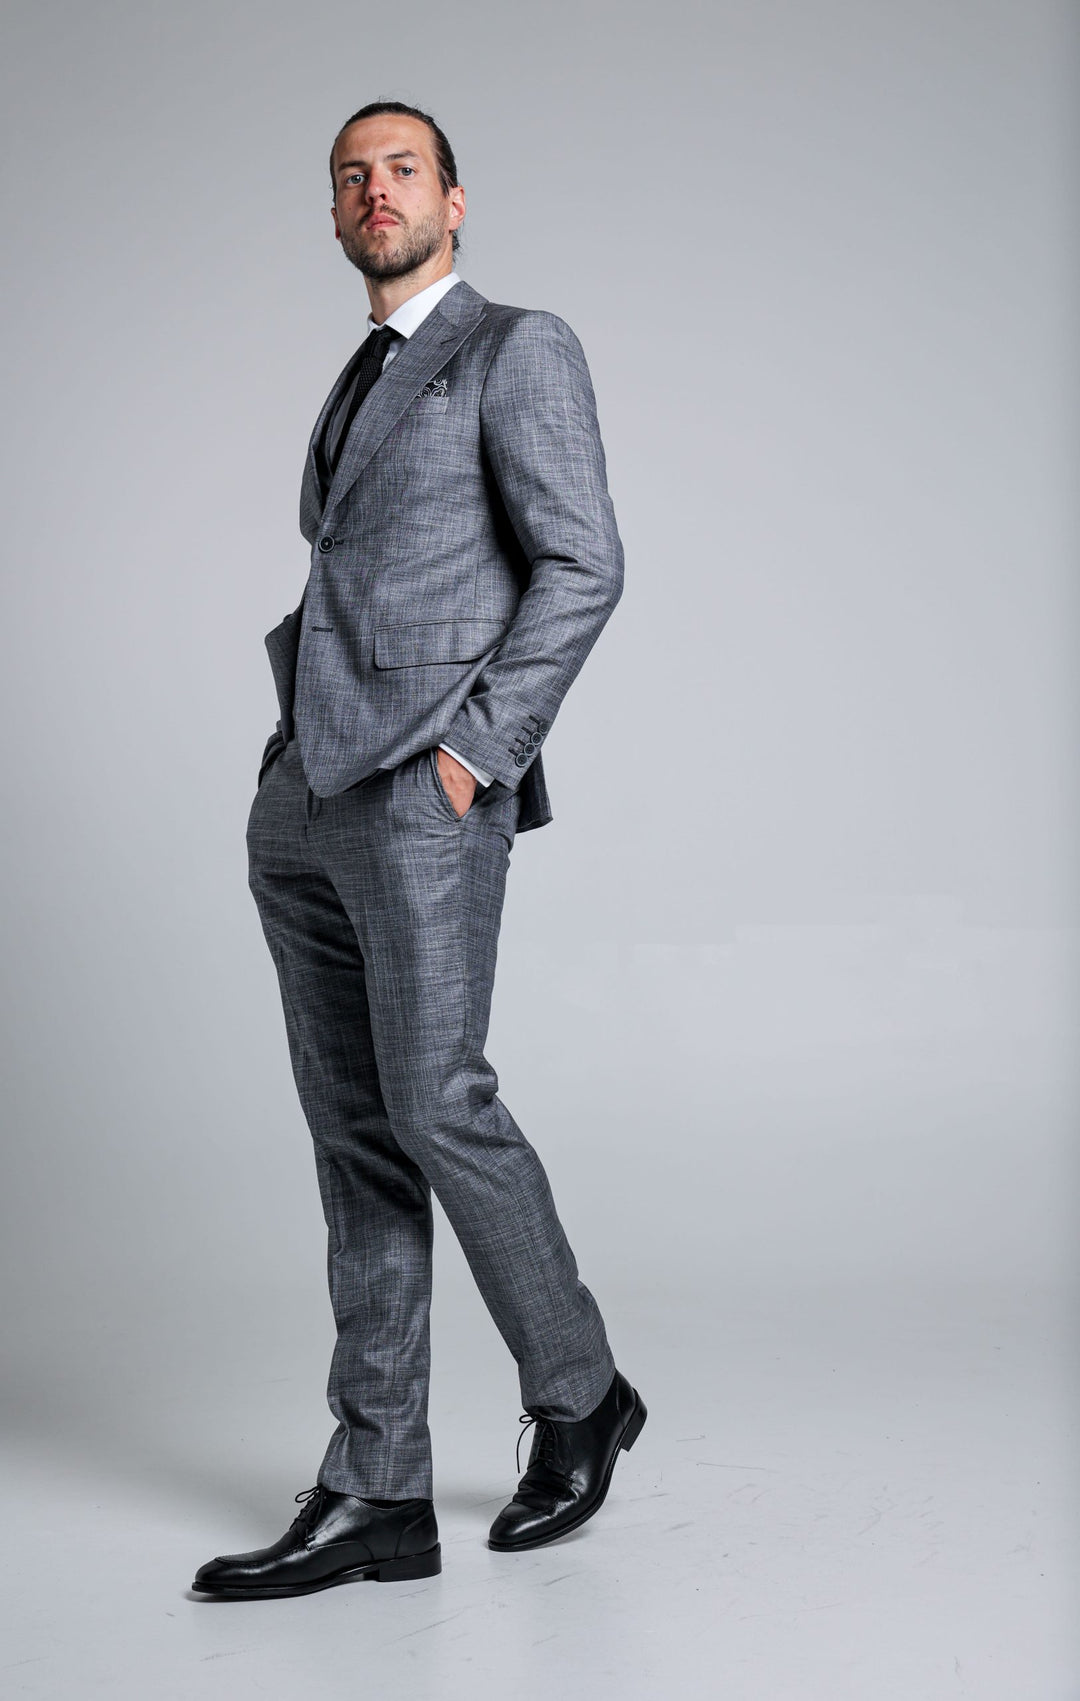 Three-piece gray suit